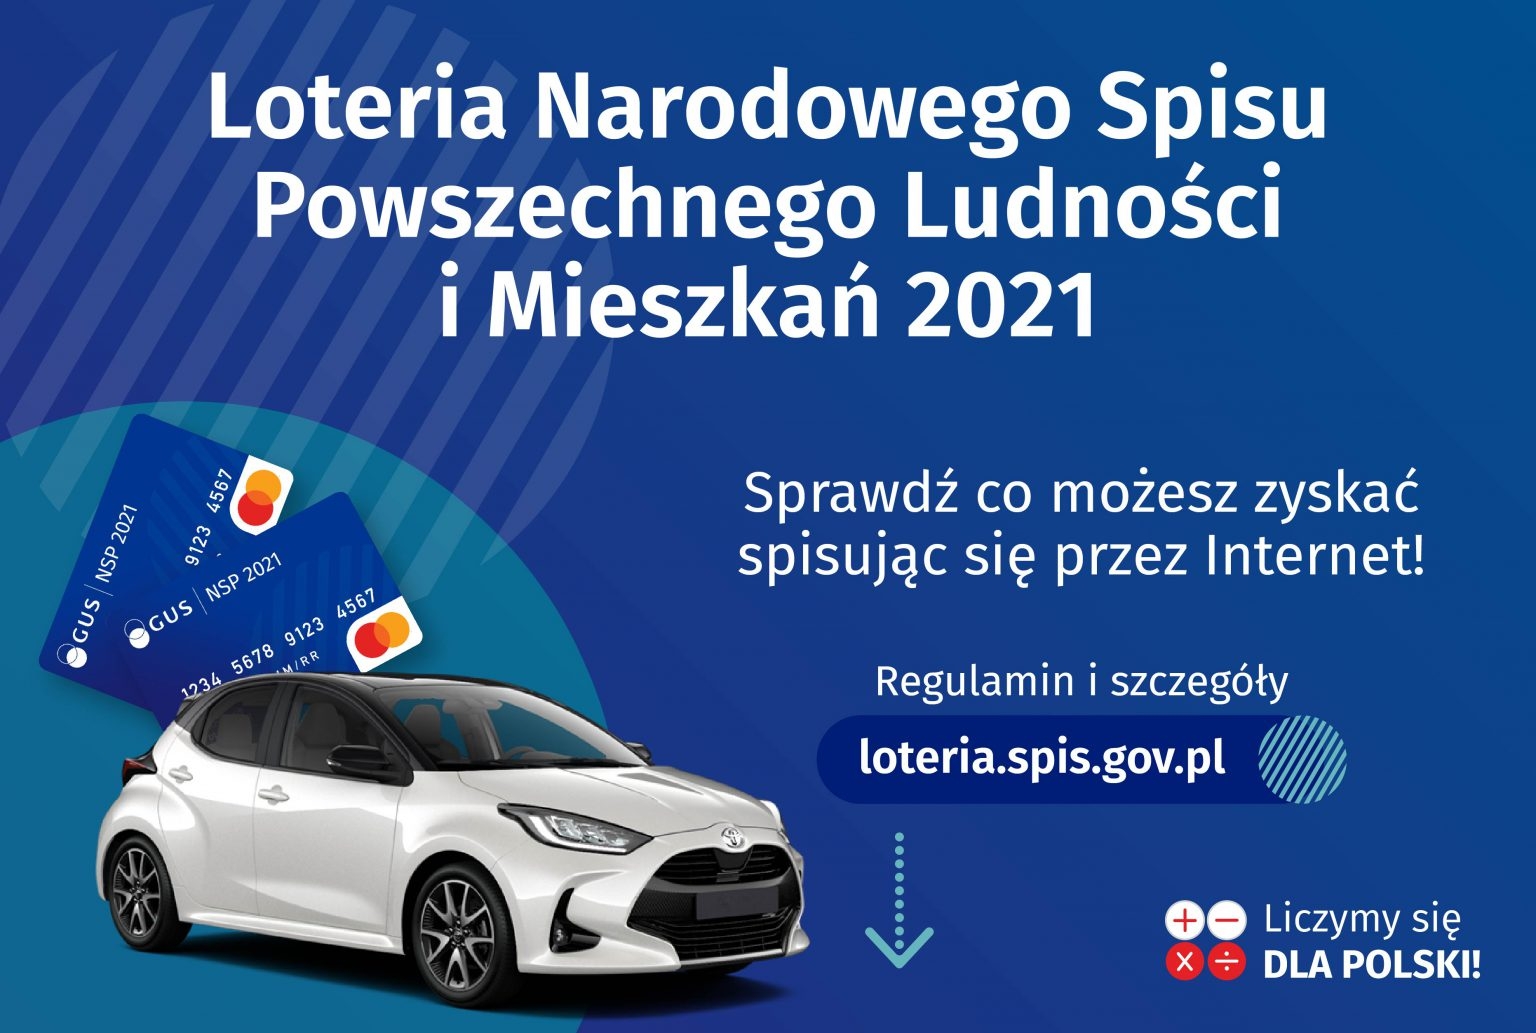 https://www.czchow.pl/images/RK/2021/NSP2021/loteria-1536x1033.jpg